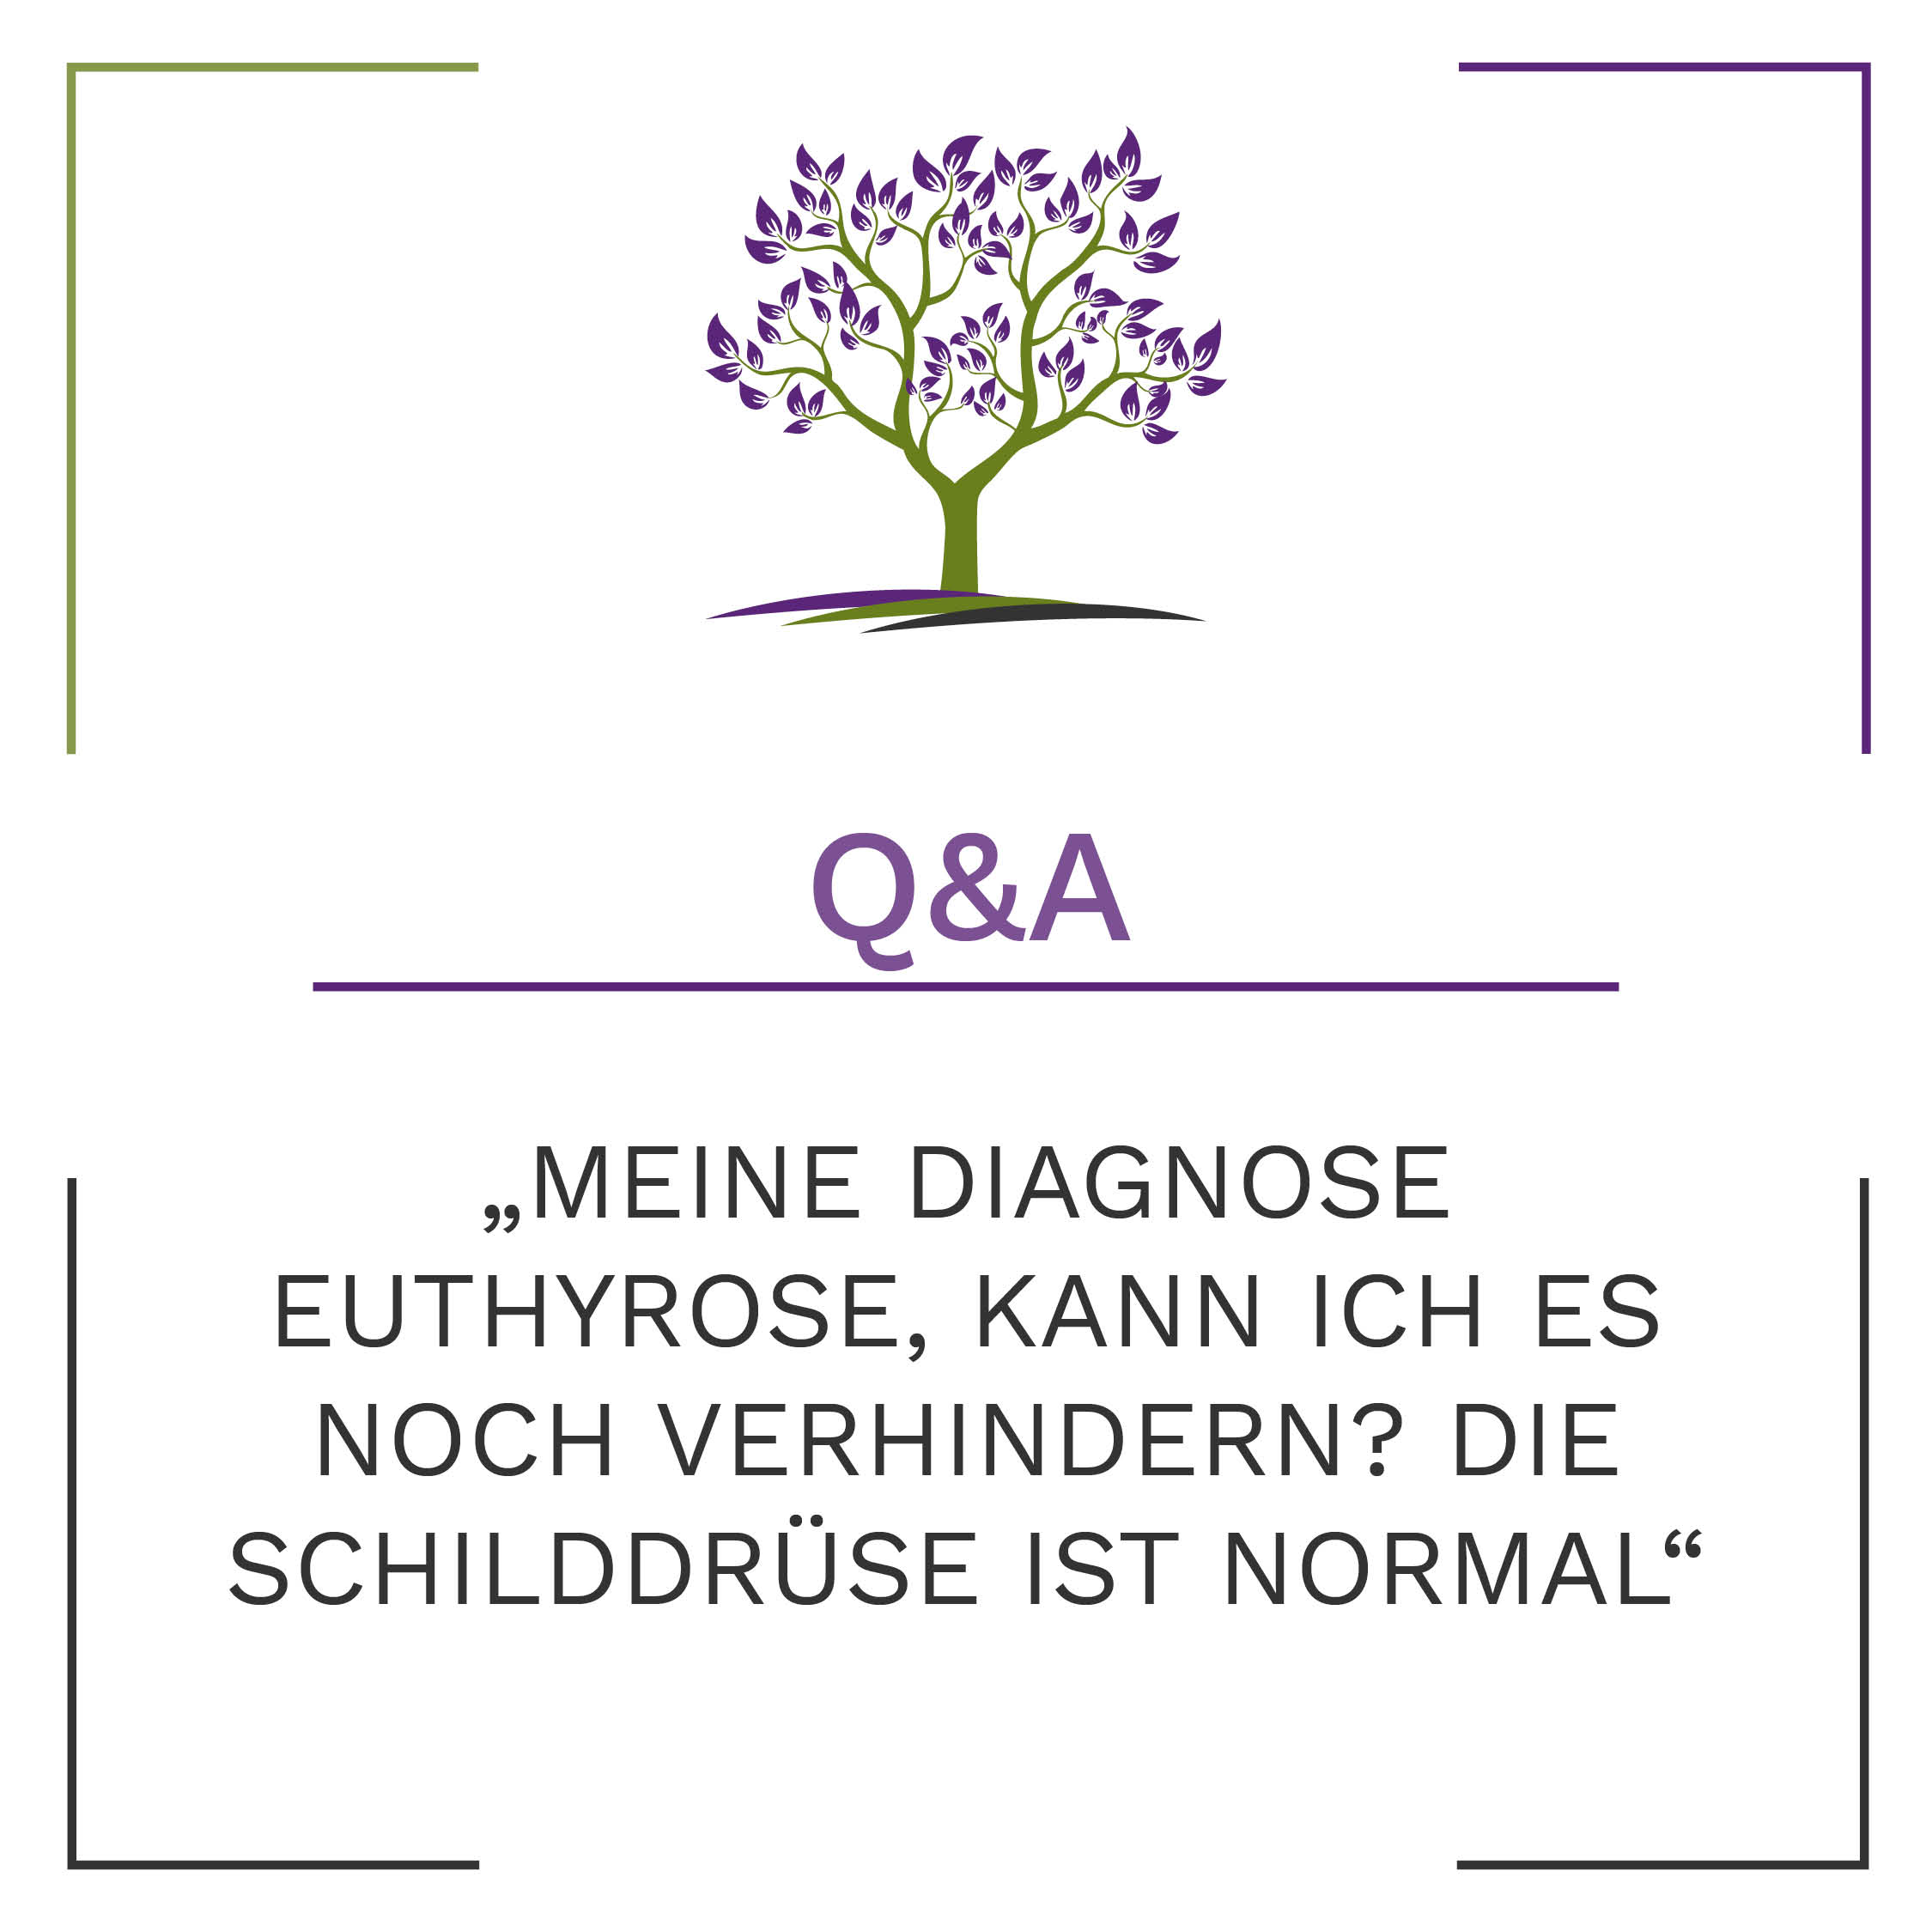 Q&A - Verhinderung Euthyreose bei normaler Schilddrüse